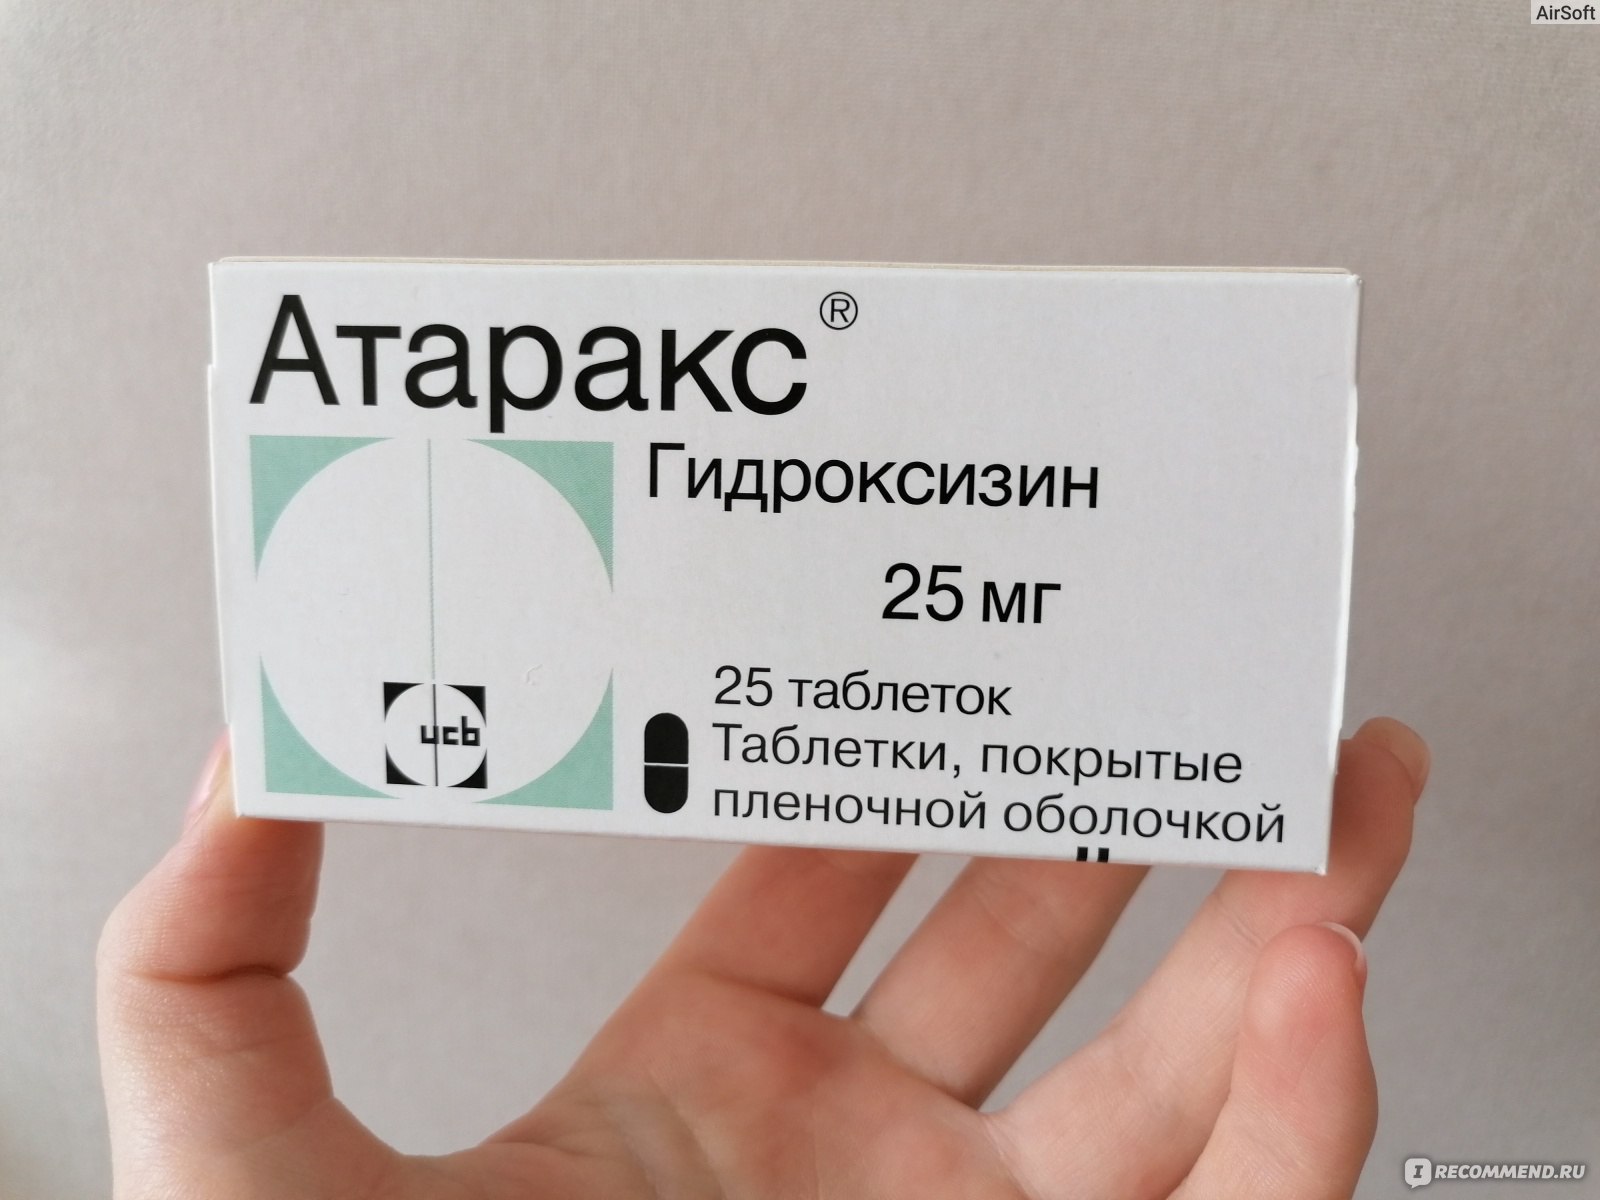 Атаракс группа препарата. Атаракс таблетки 25мг. Атаракс 25 мг. Гидроксизин (атаракс) 25 мг.